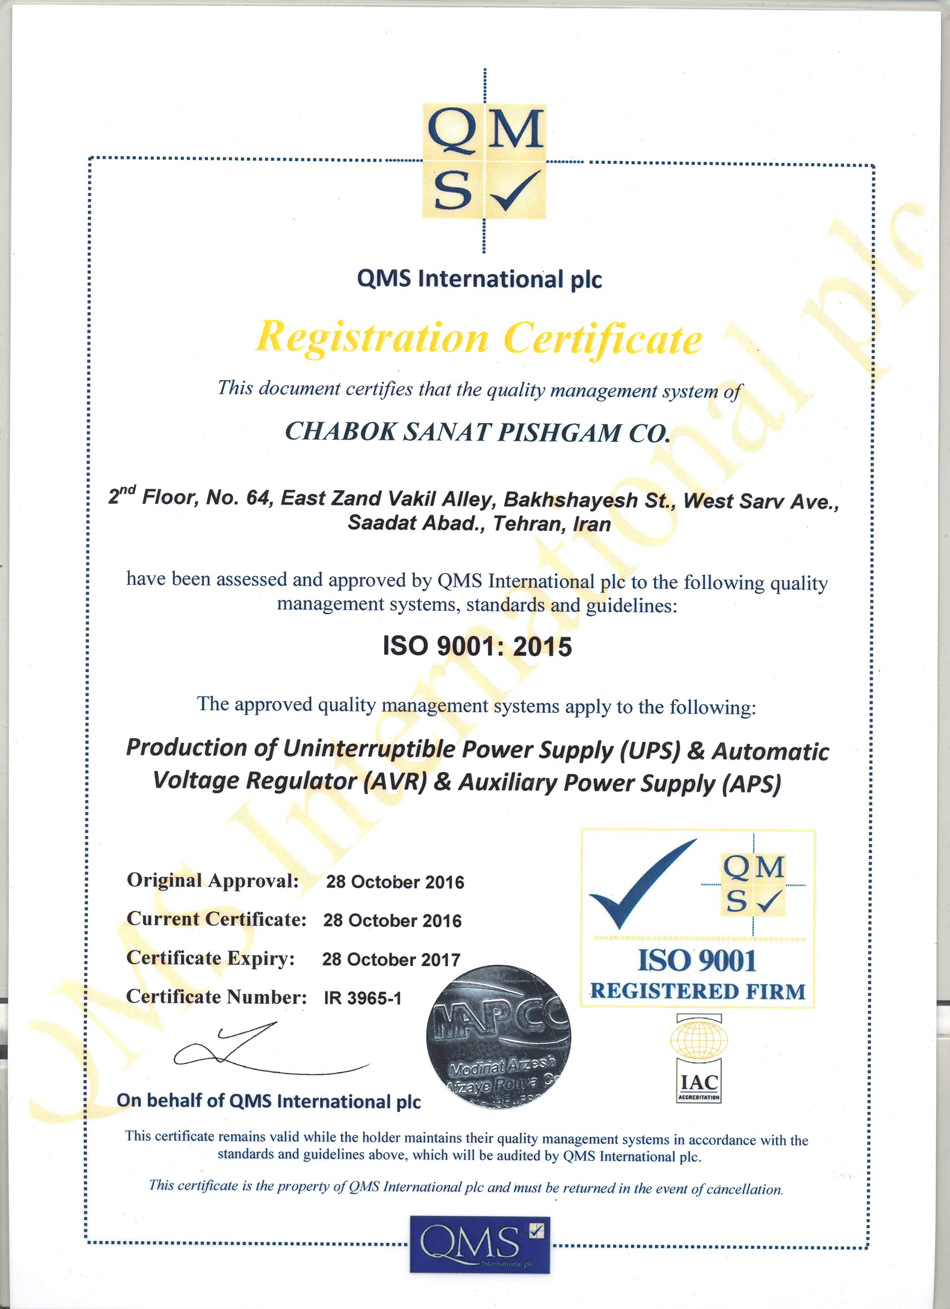 Registration Certificate Of ISO 9001:2015